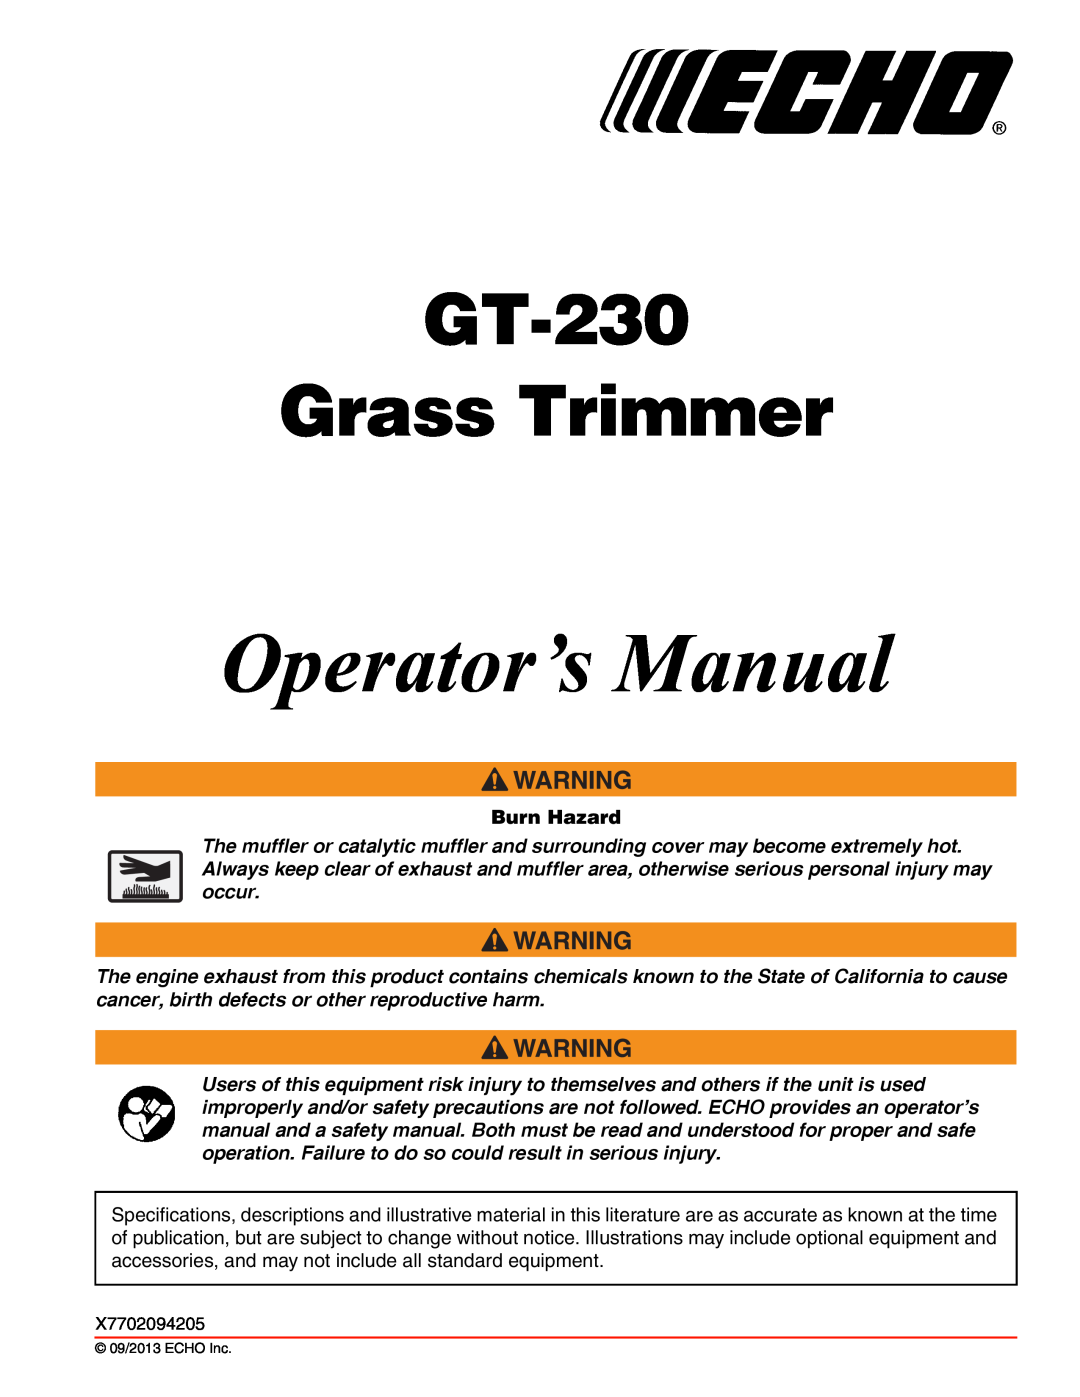 Echo specifications Burn Hazard, Operator’s Manual, GT-230 Grass Trimmer 